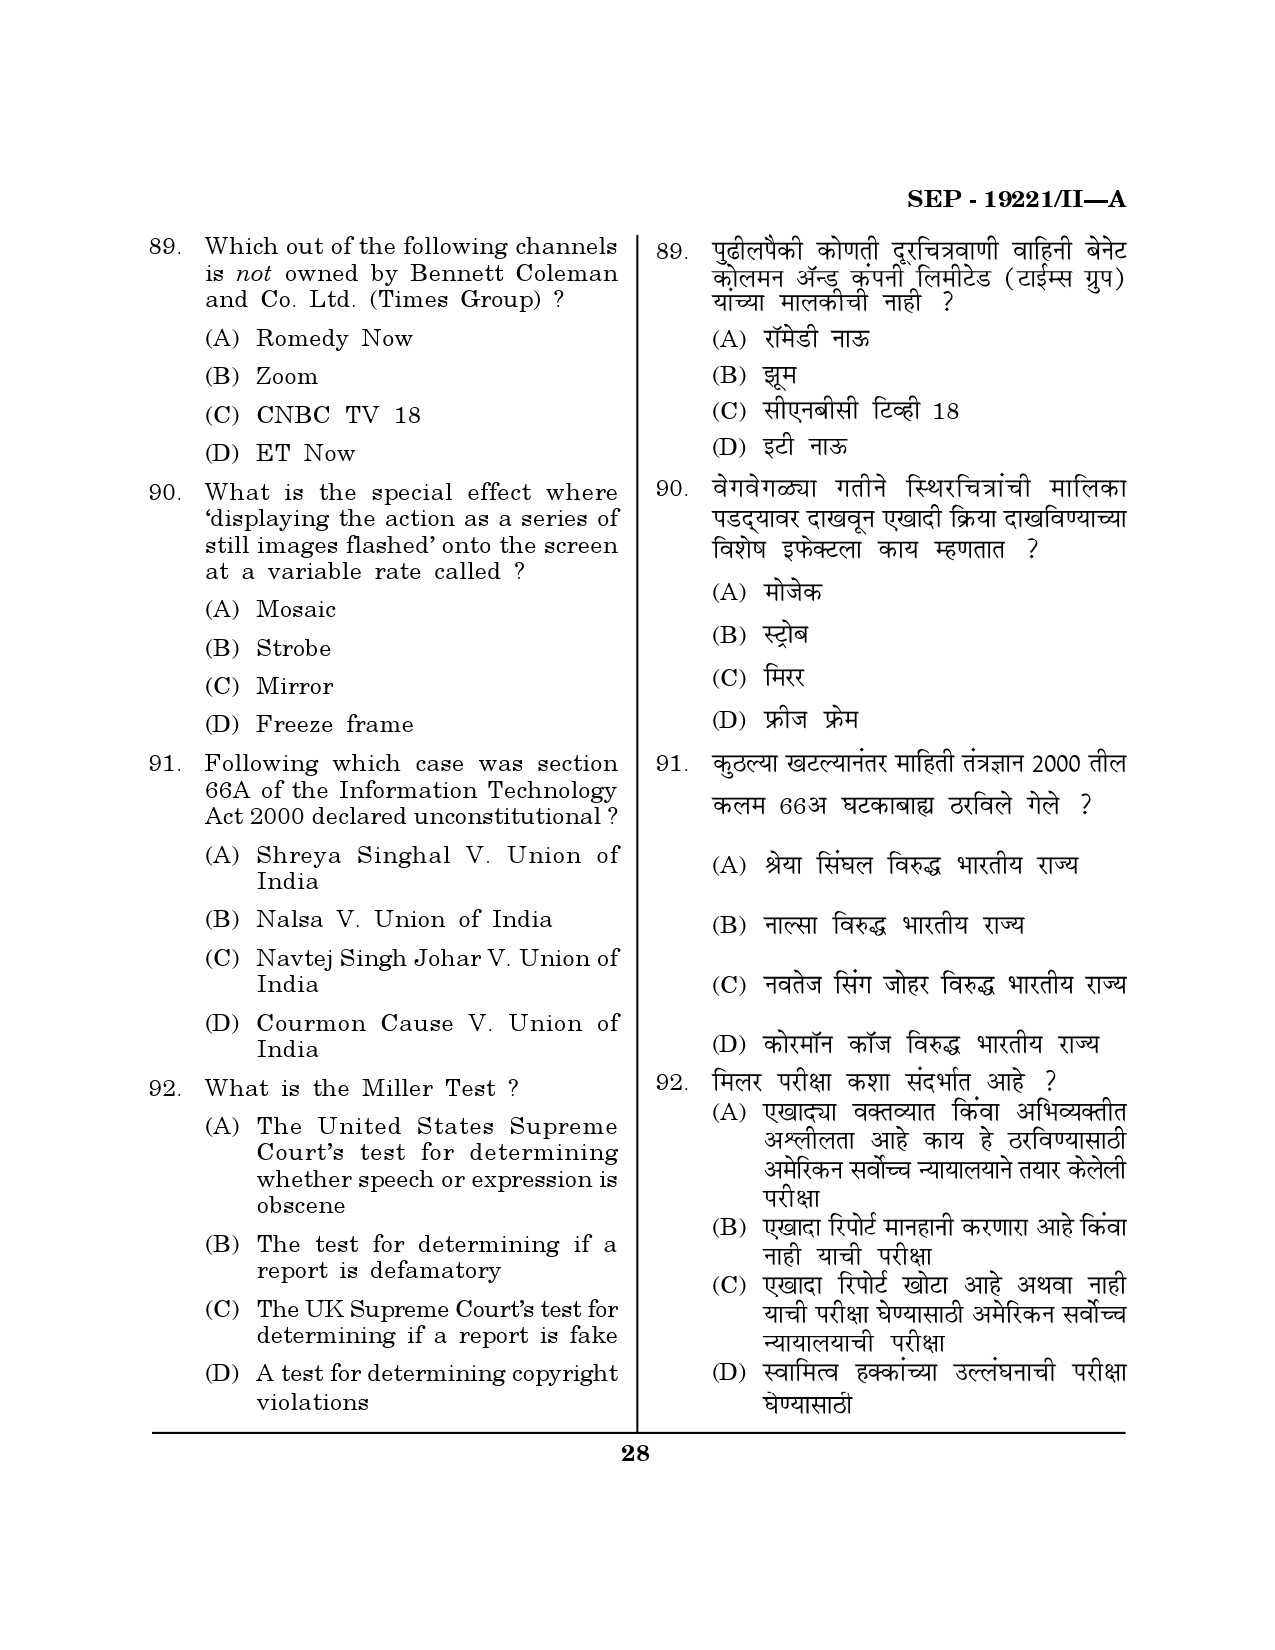 Maharashtra SET Journalism and Mass Communication Exam Question Paper September 2021 27